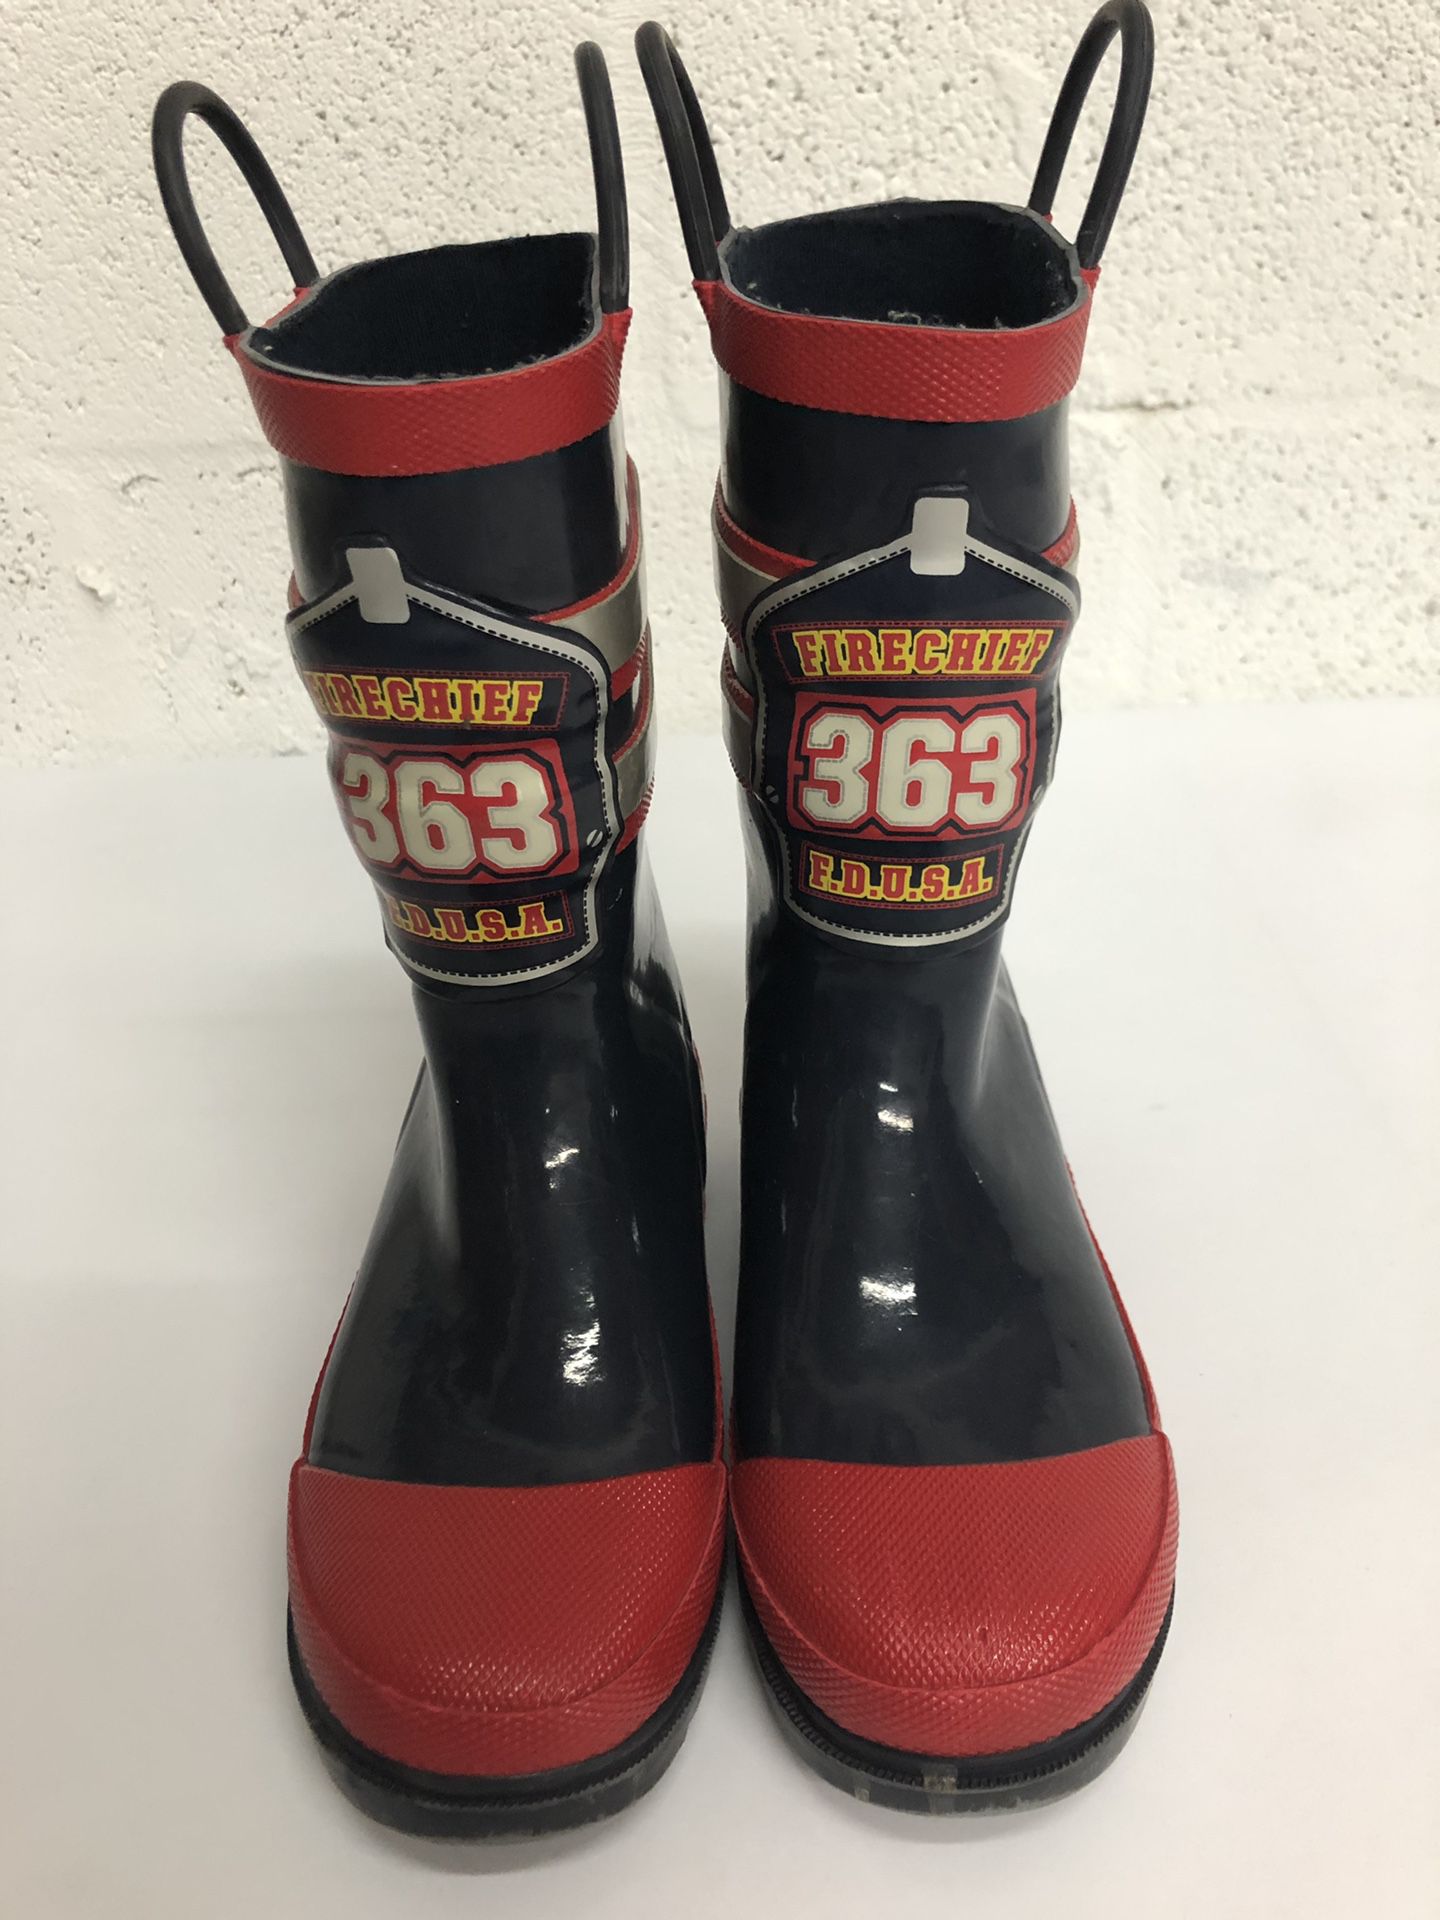 Rain boots fireman 🚒 kids size 13/1